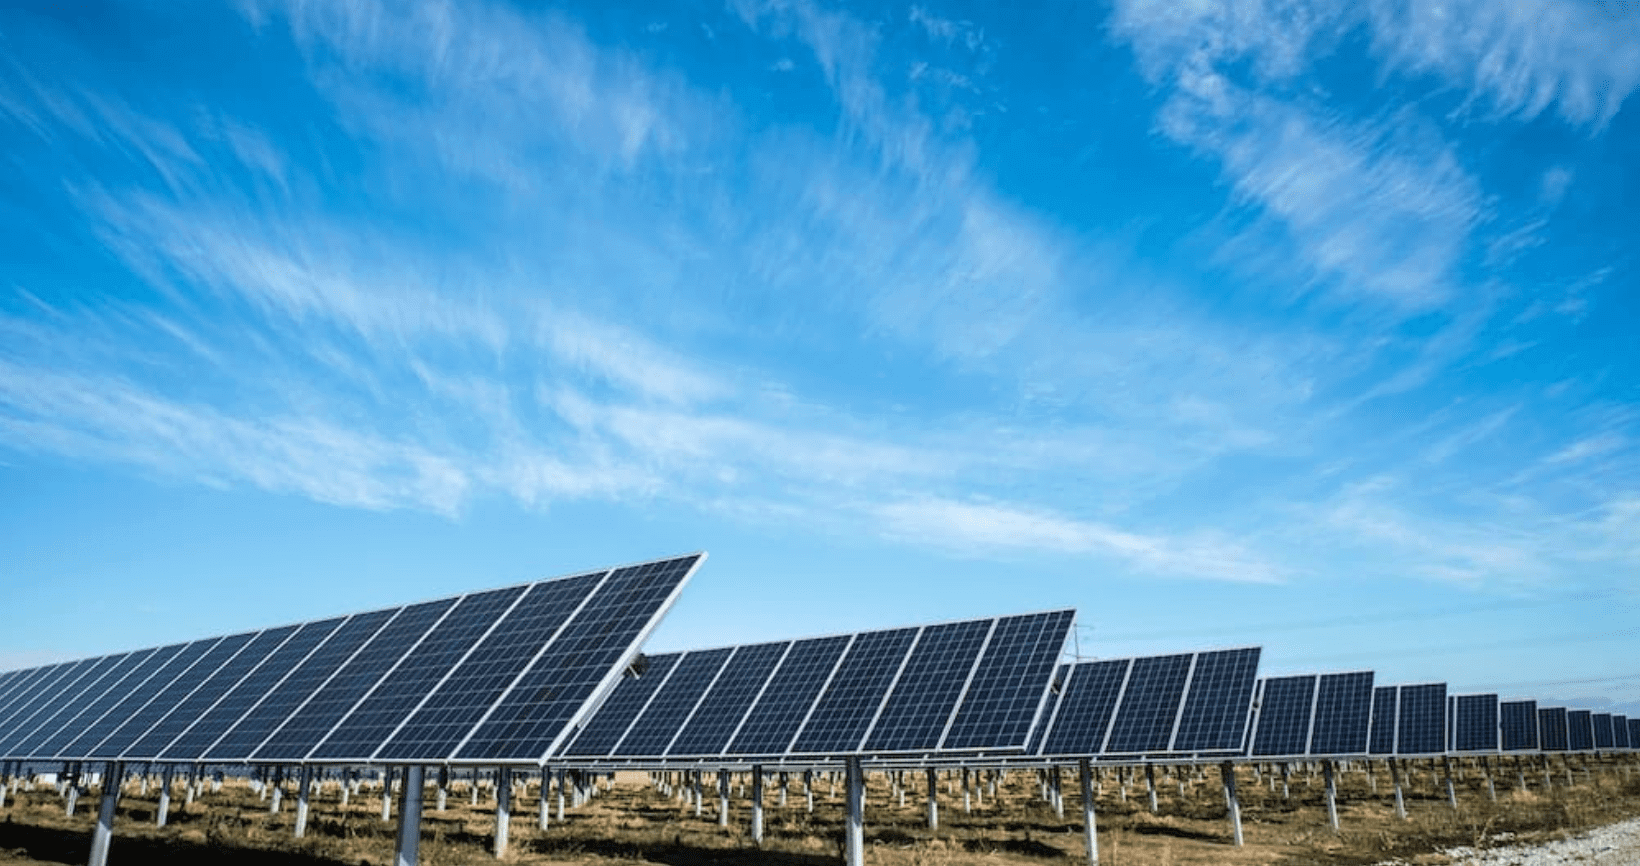 Community Solar Farm